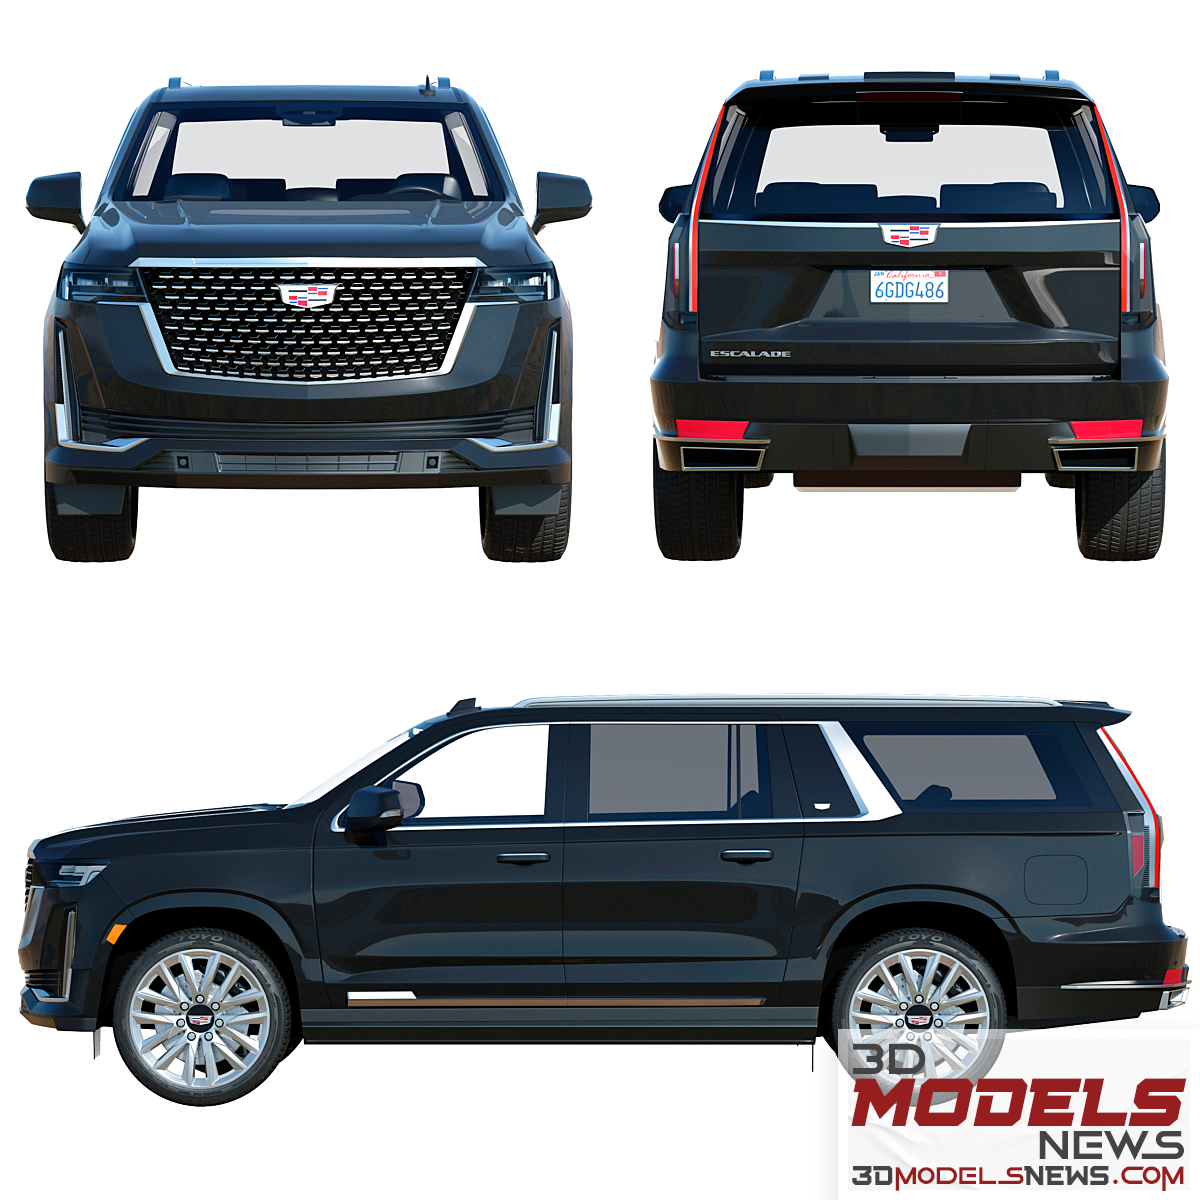 Cadillac Escalade ESV Luxury Model 2021 - 3D Models News